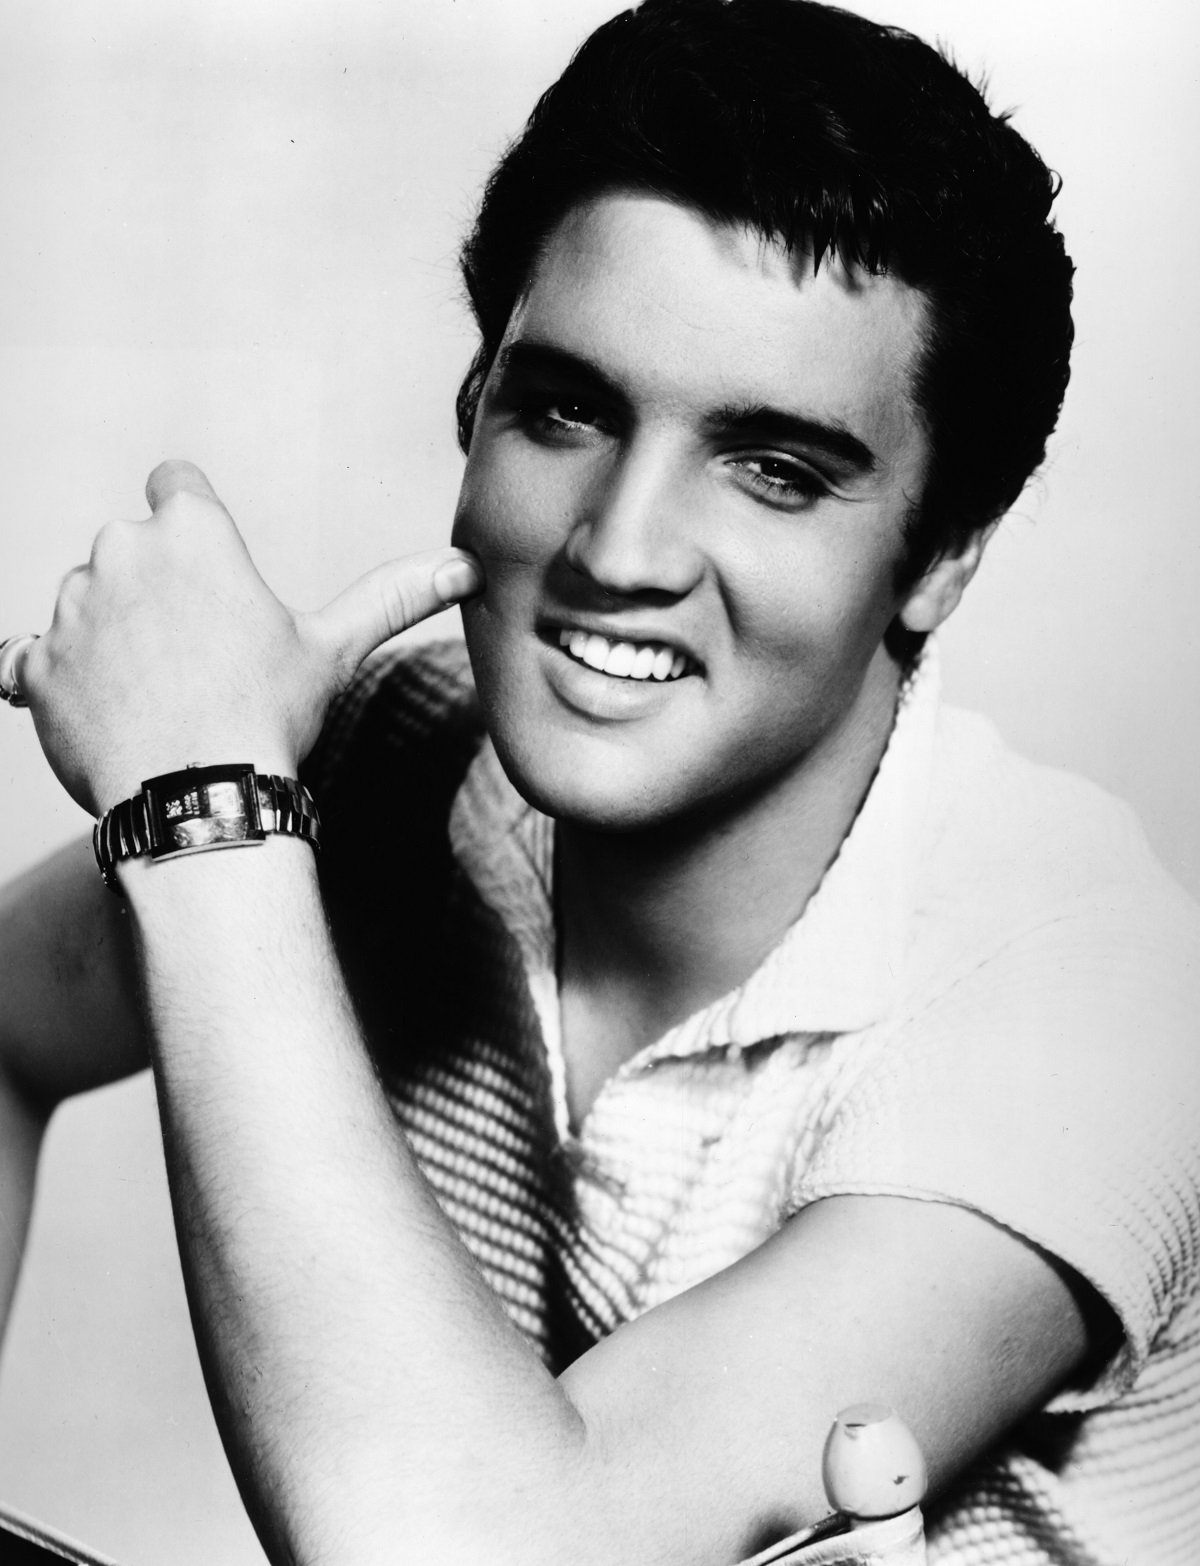 Portrait of Elvis Presley in the 1950s